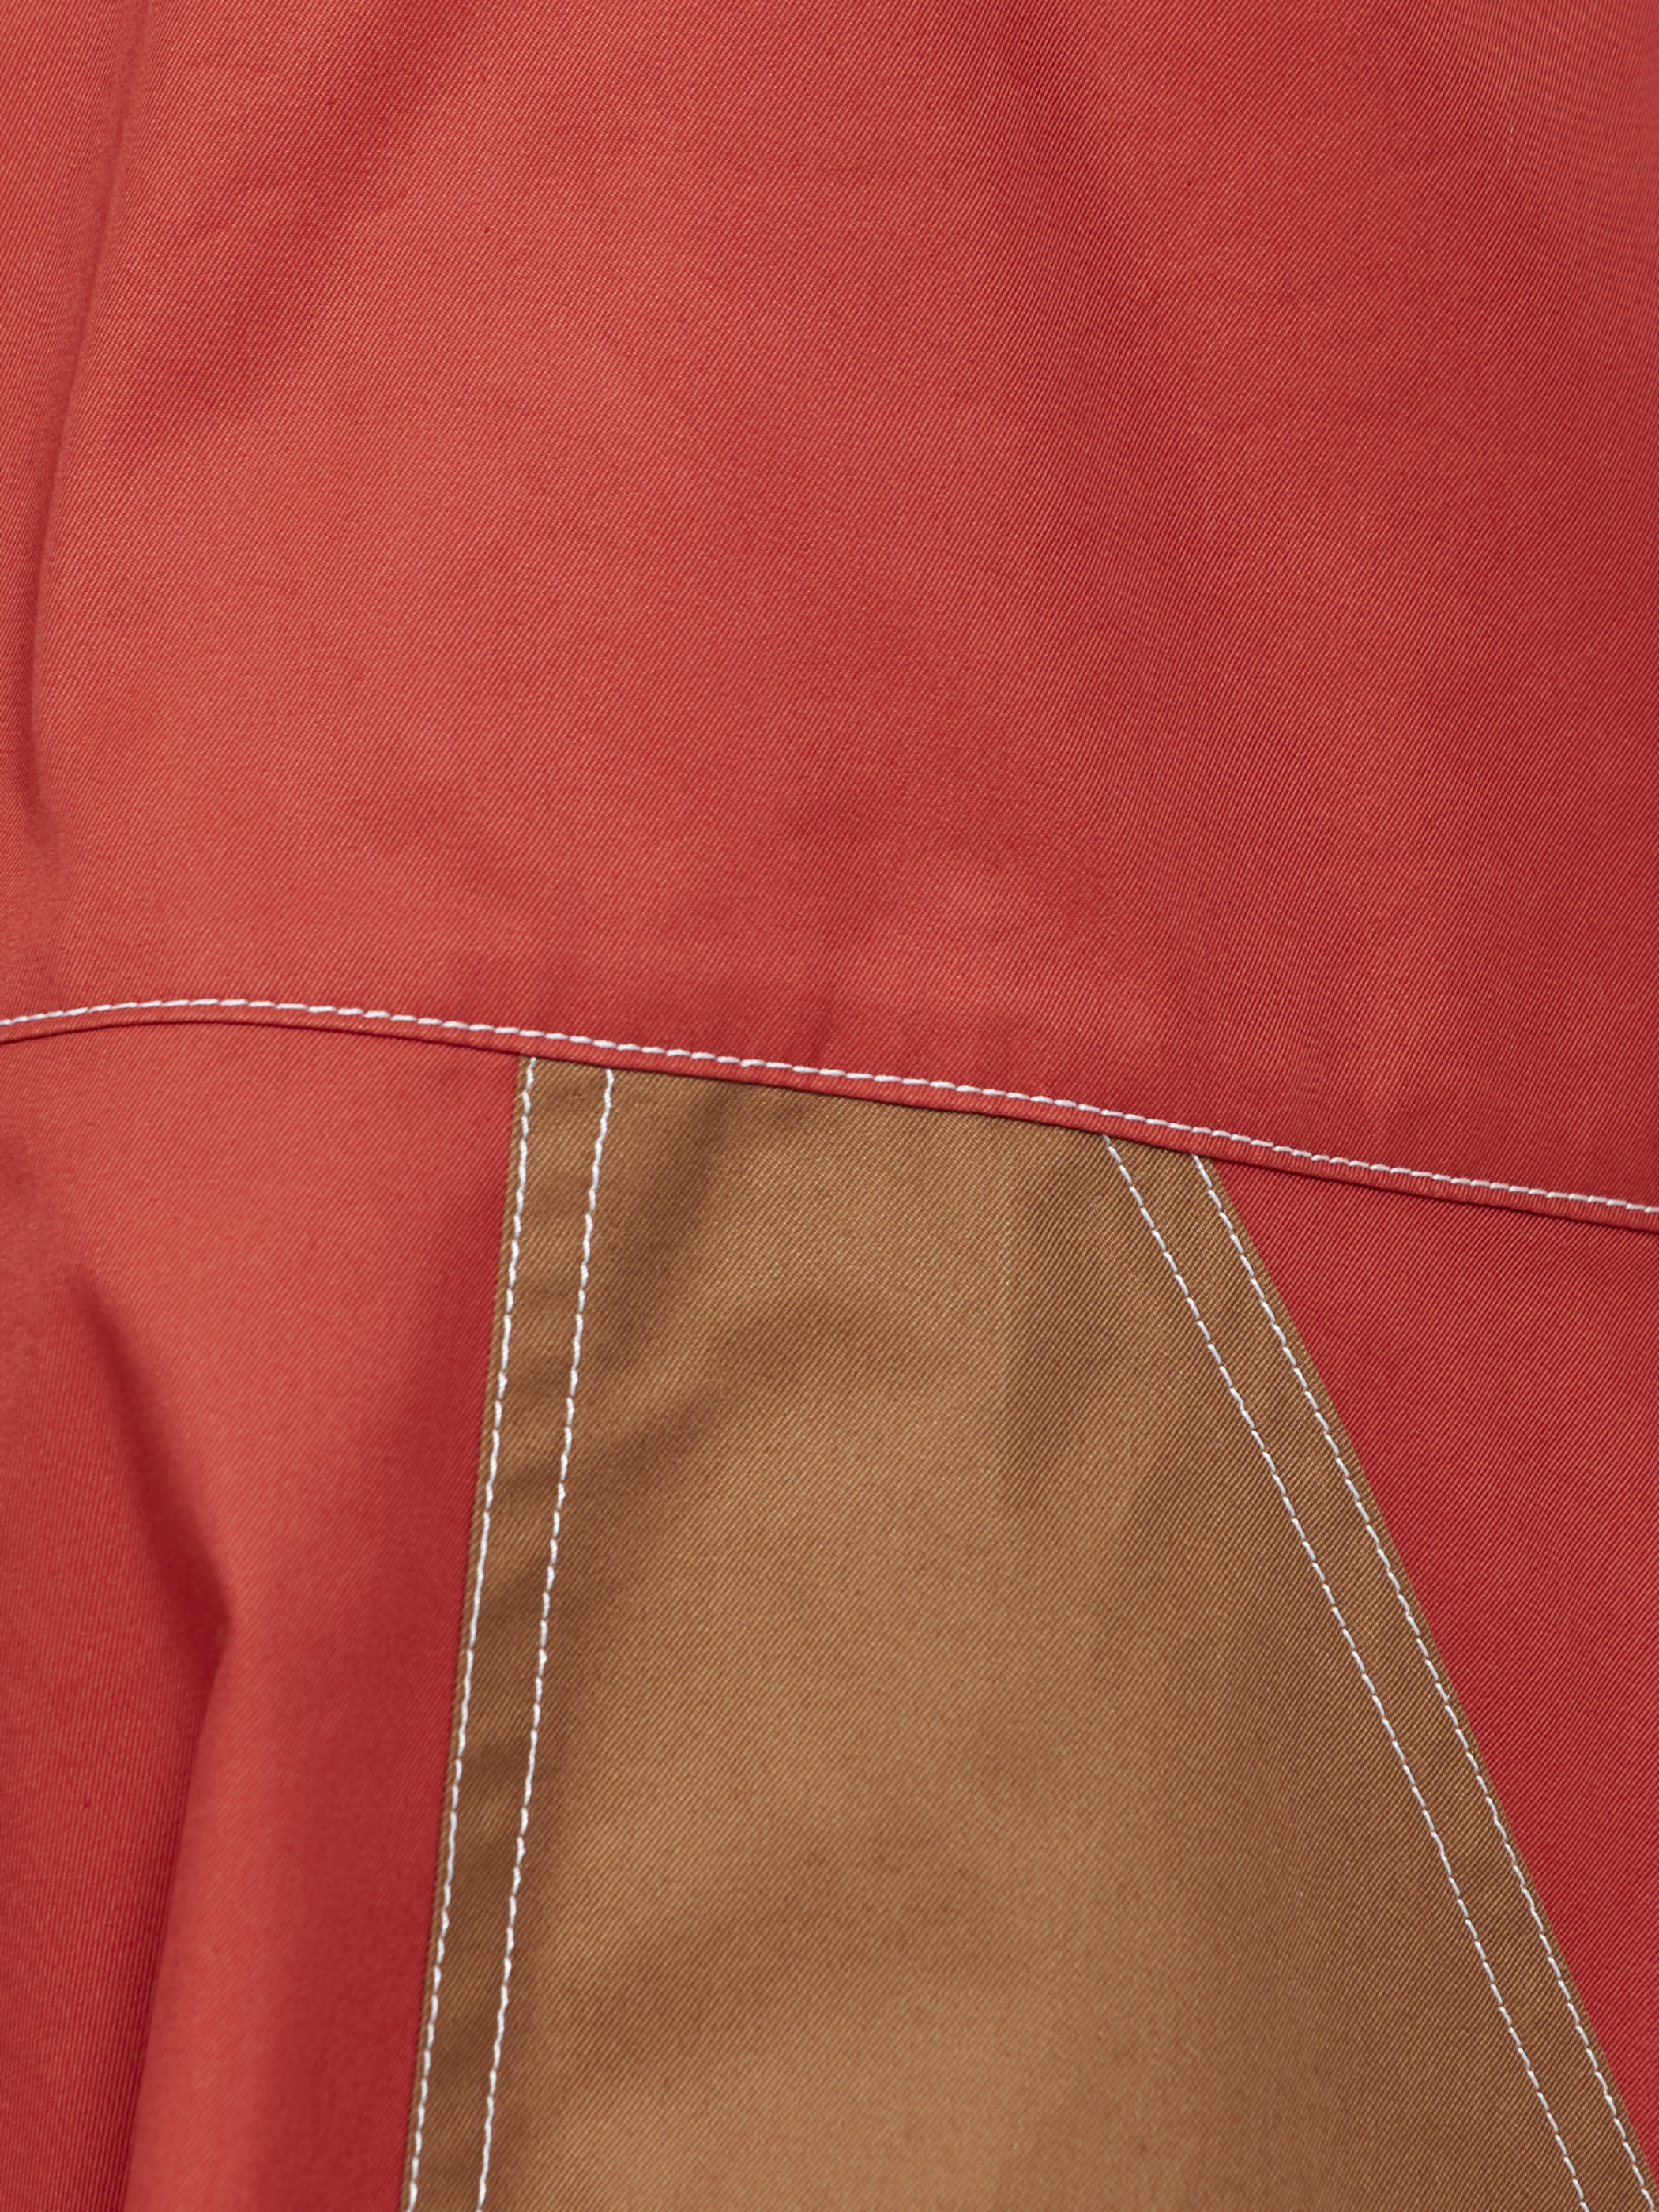 【SALE】マイパンダ bicolored jumper skirt